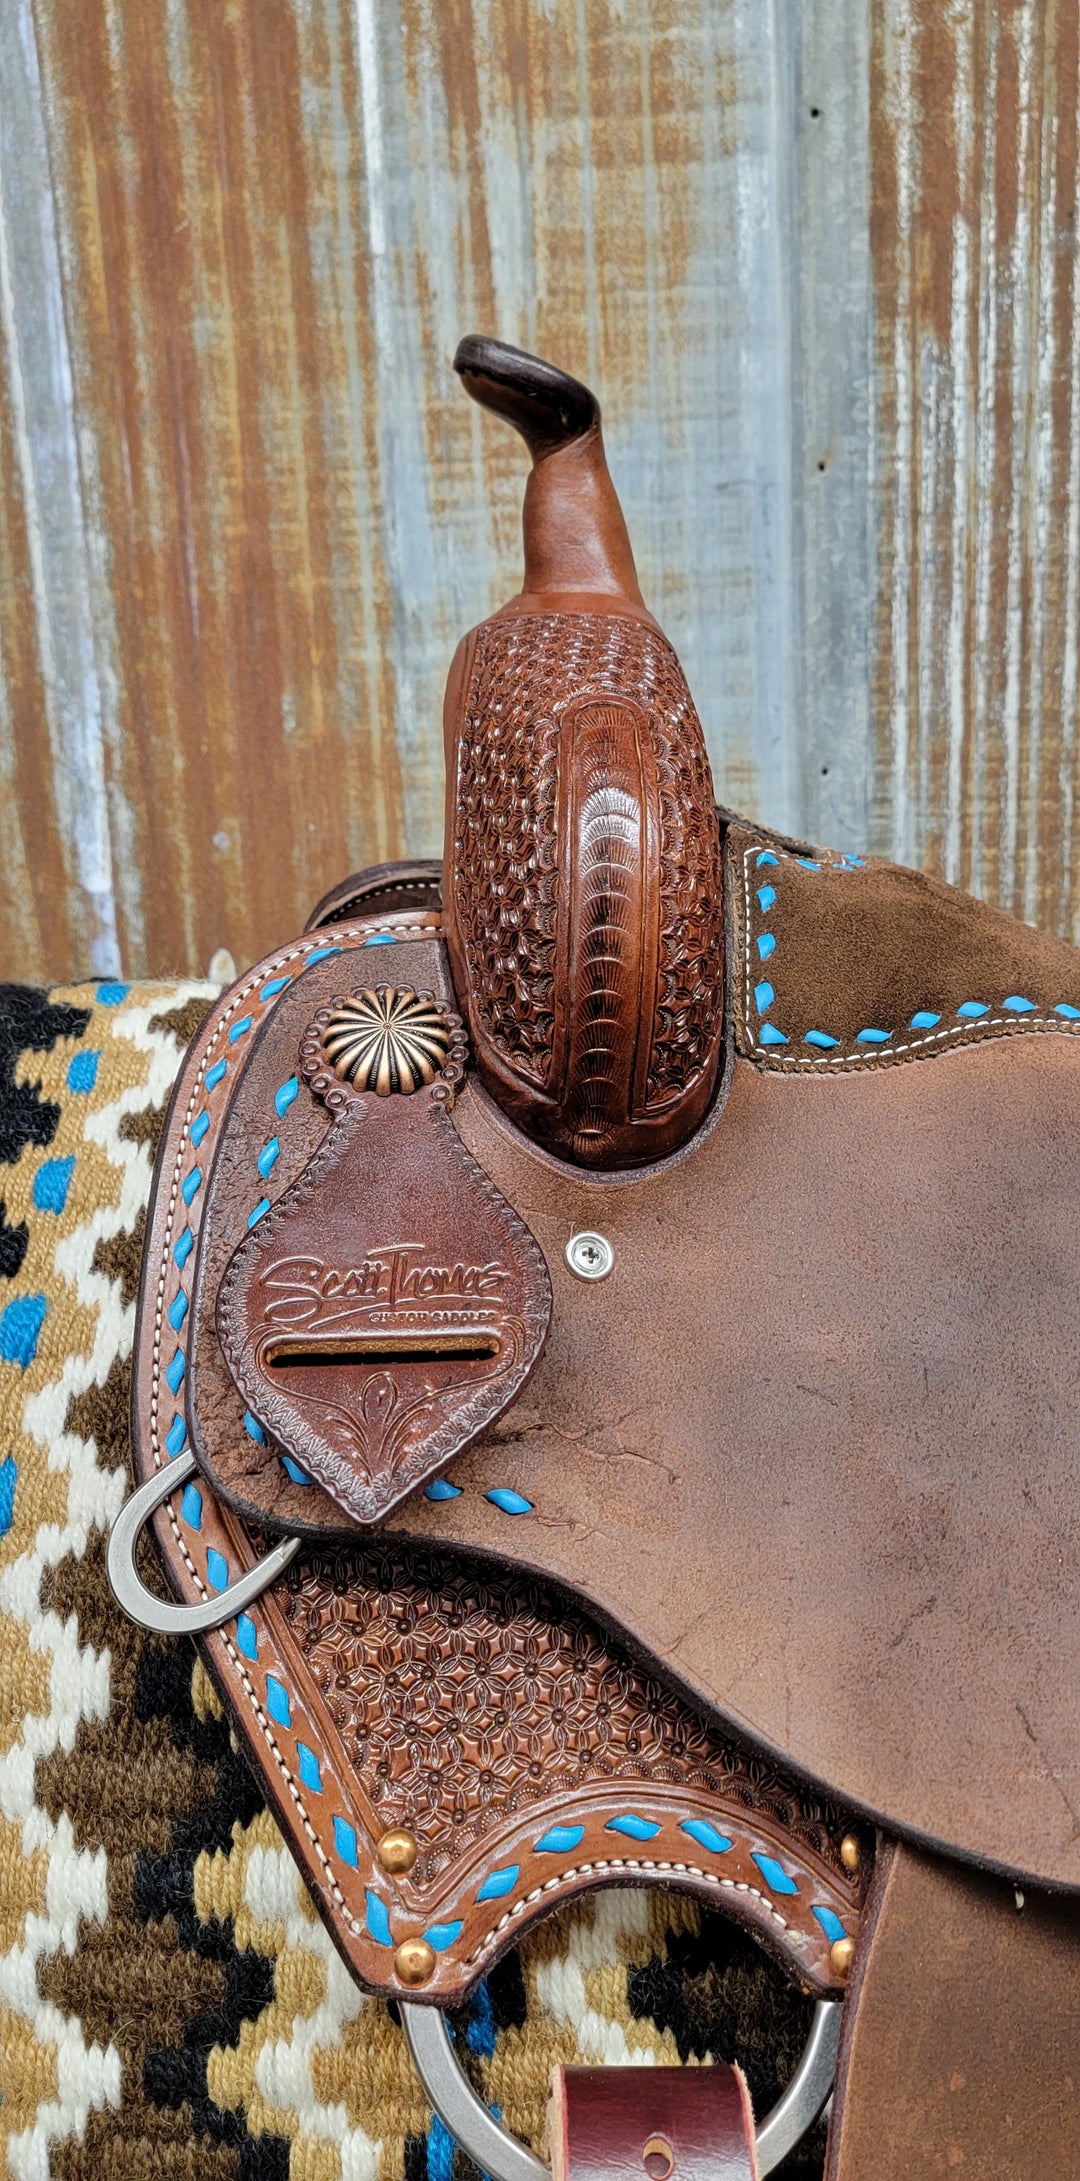 Scott Thomas Custom Barrel Saddle